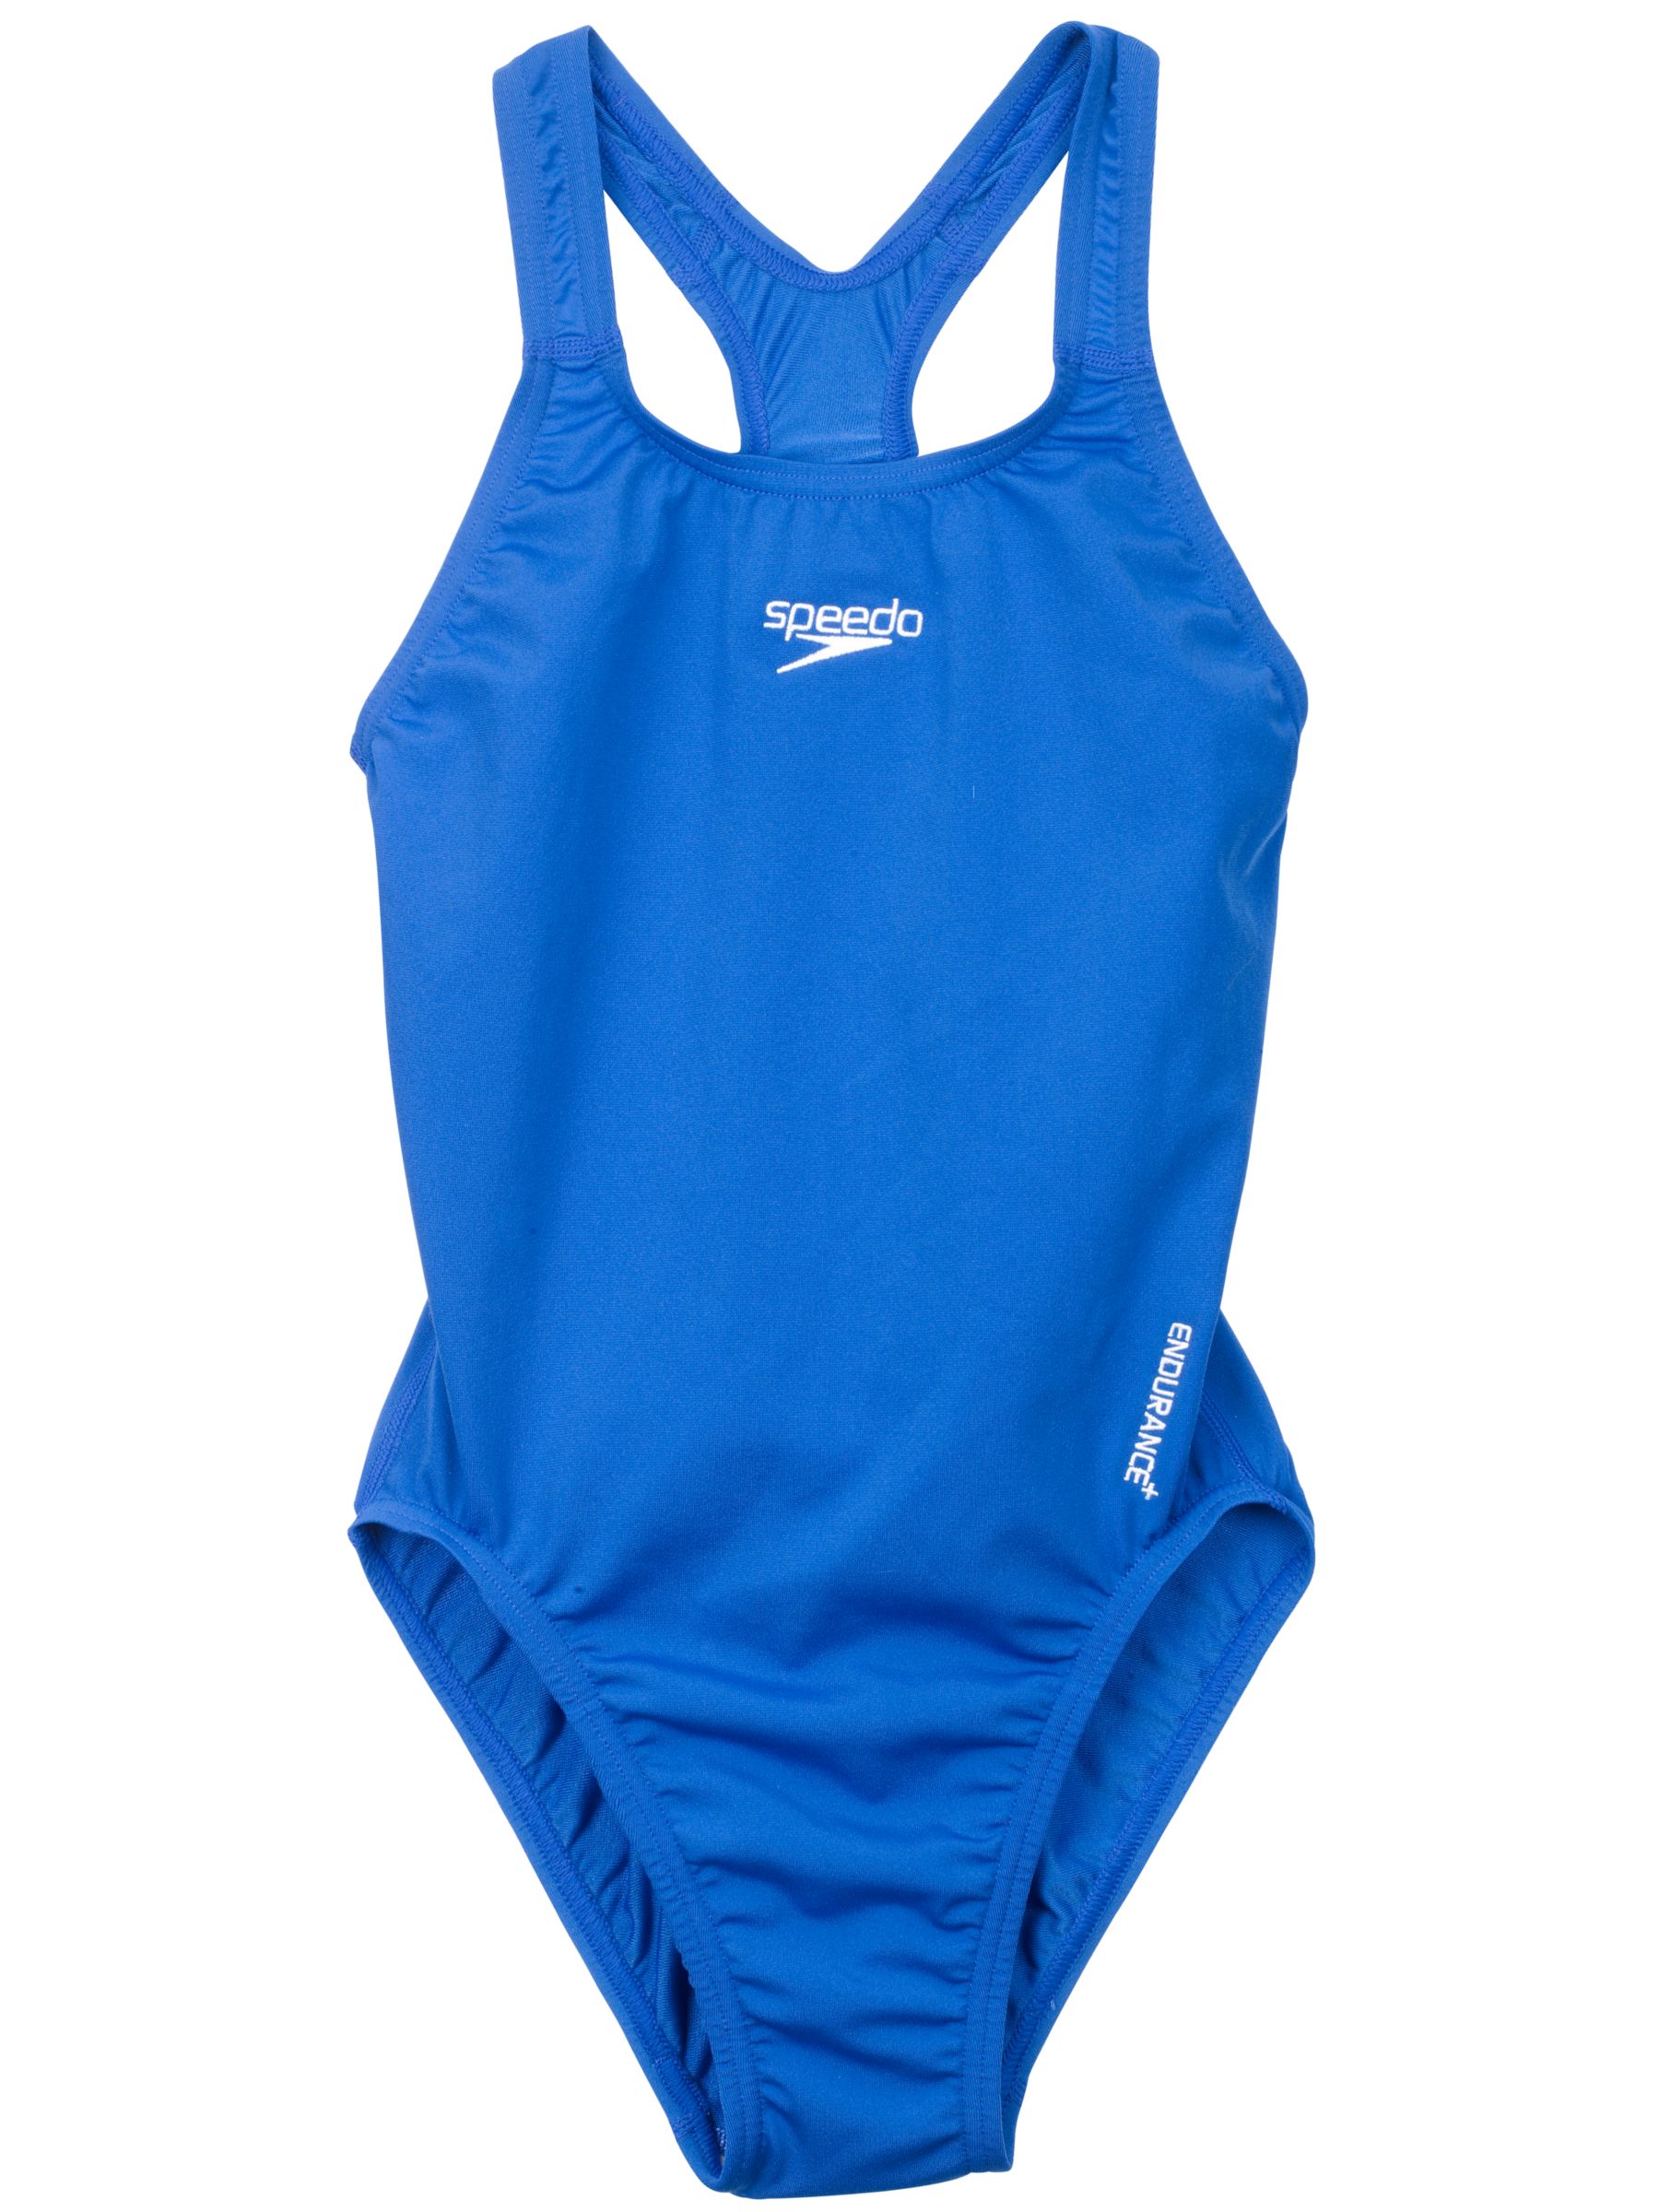 Speedo Medalist Swimsuit, Blue, 12 Years